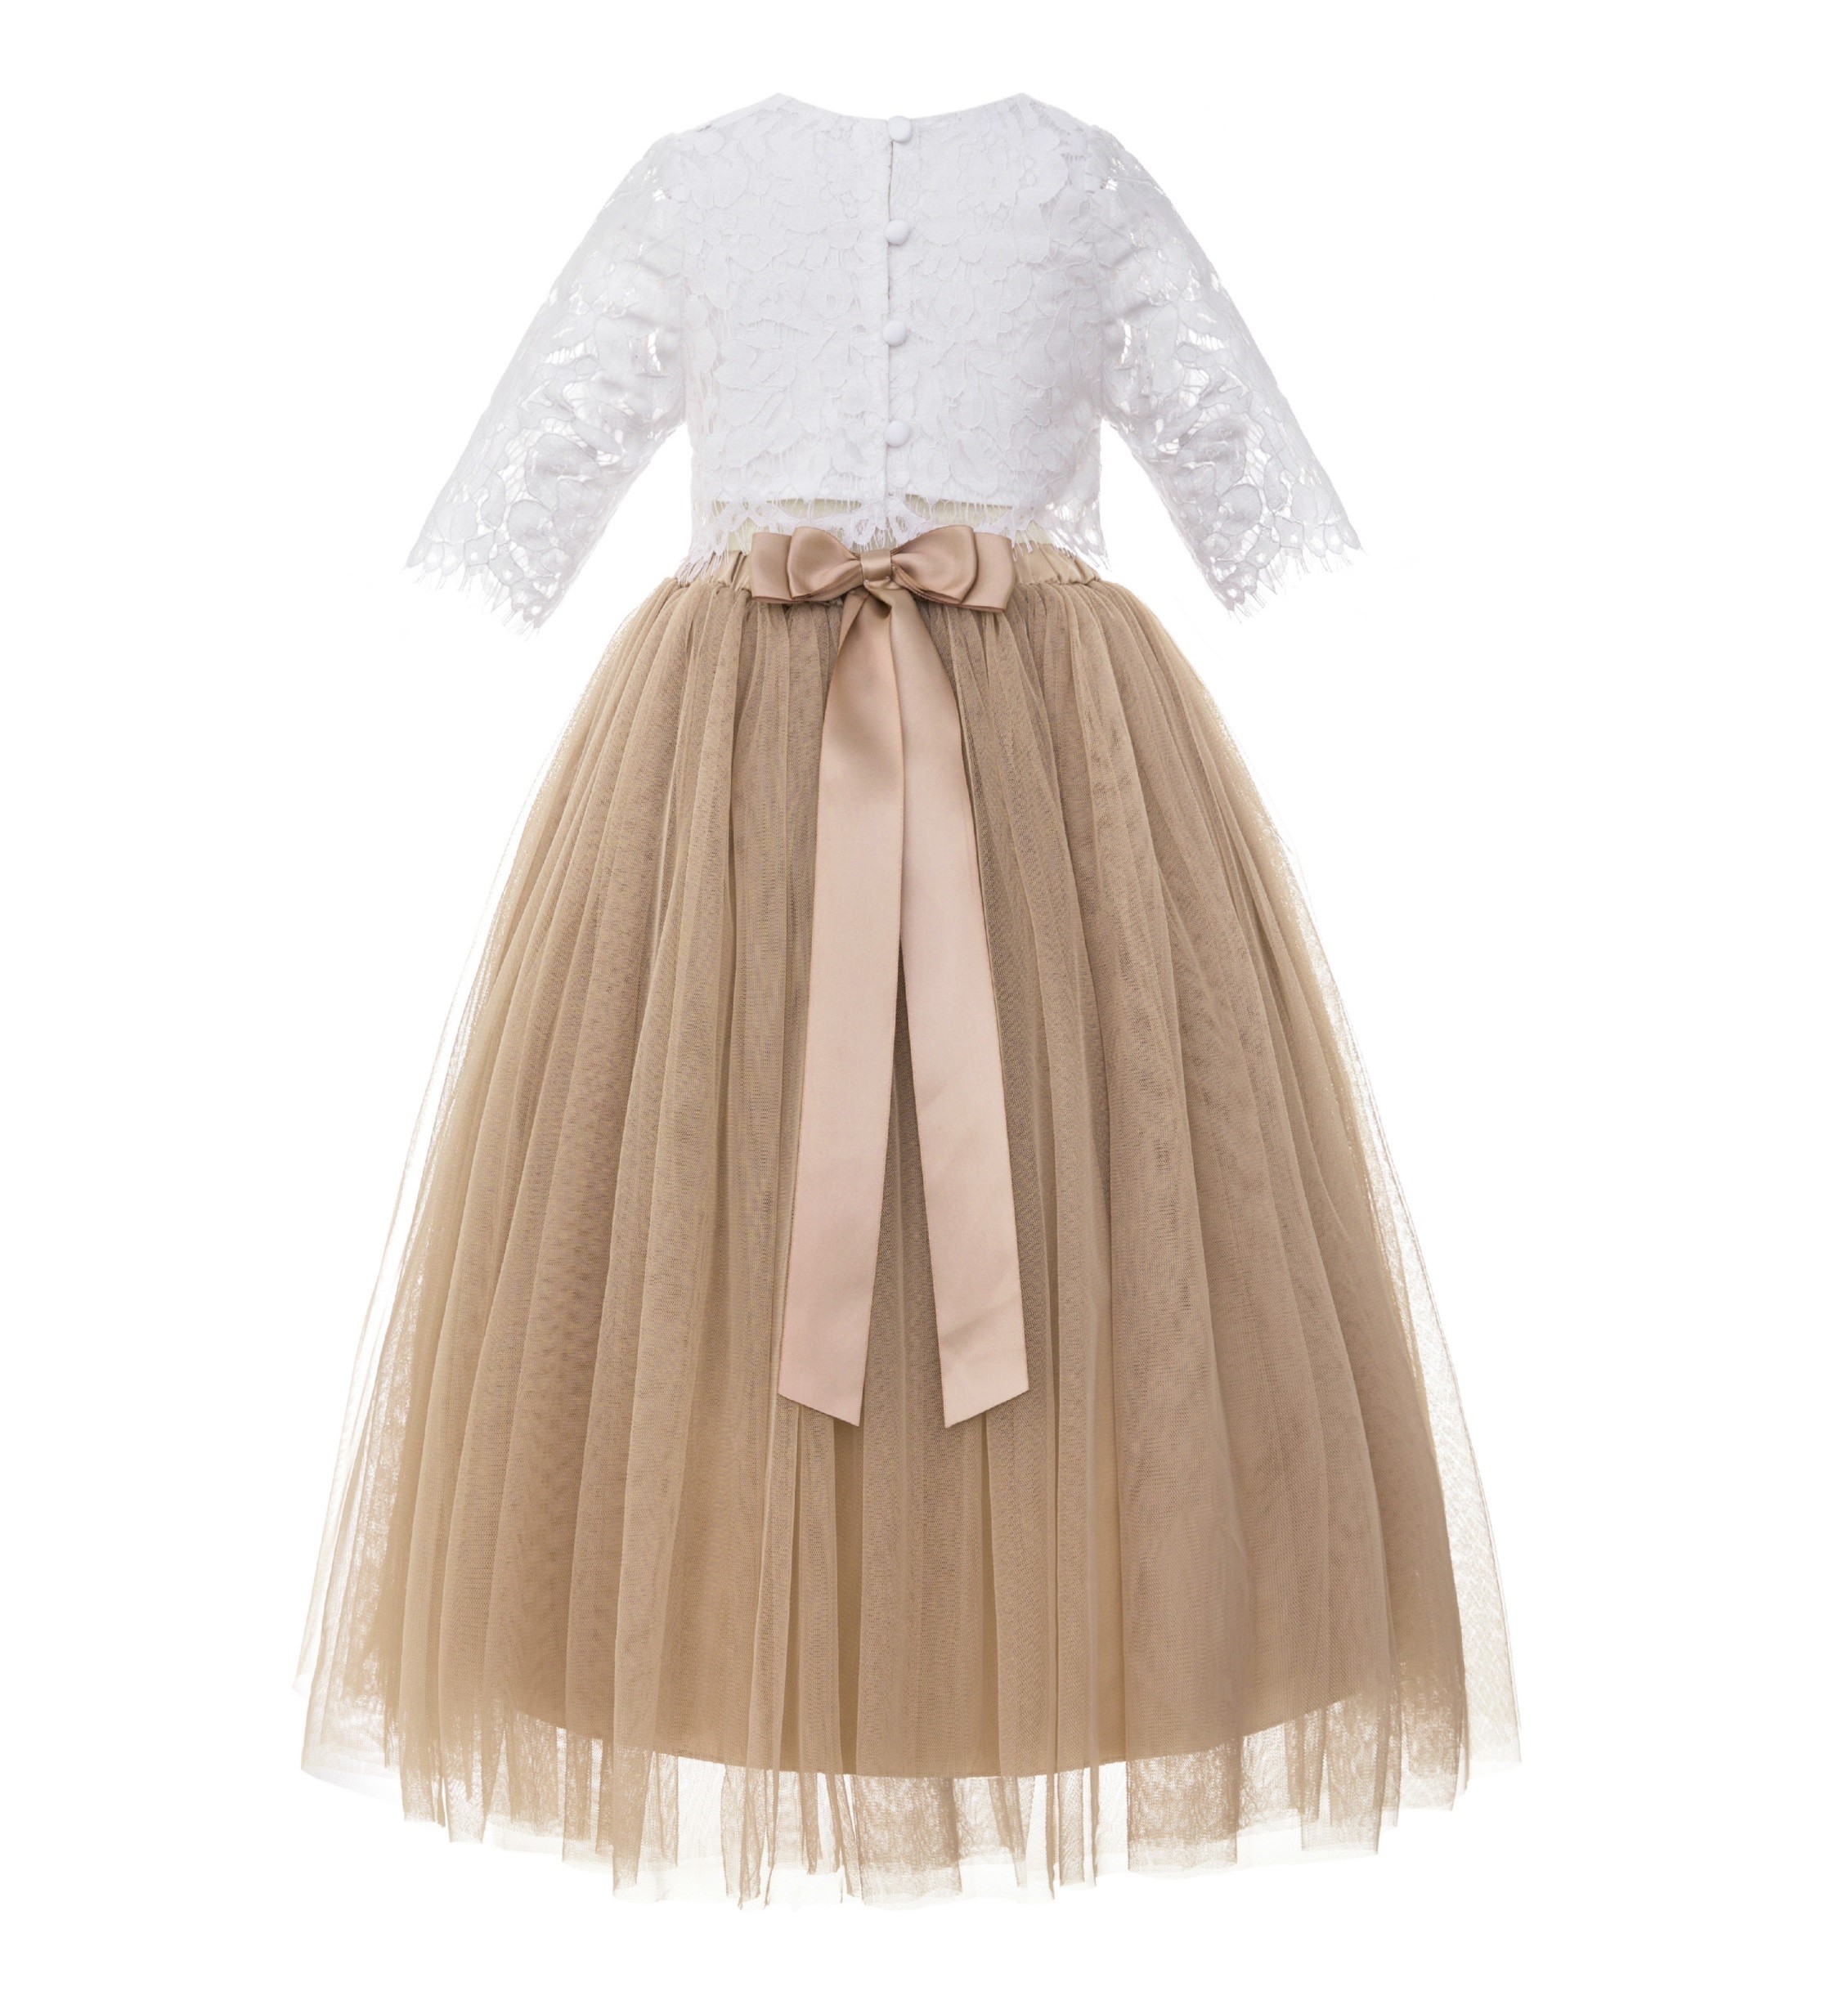 Rose Gold Eyelash Lace Flower Girl Dress A-Line Tulle Dress LG5